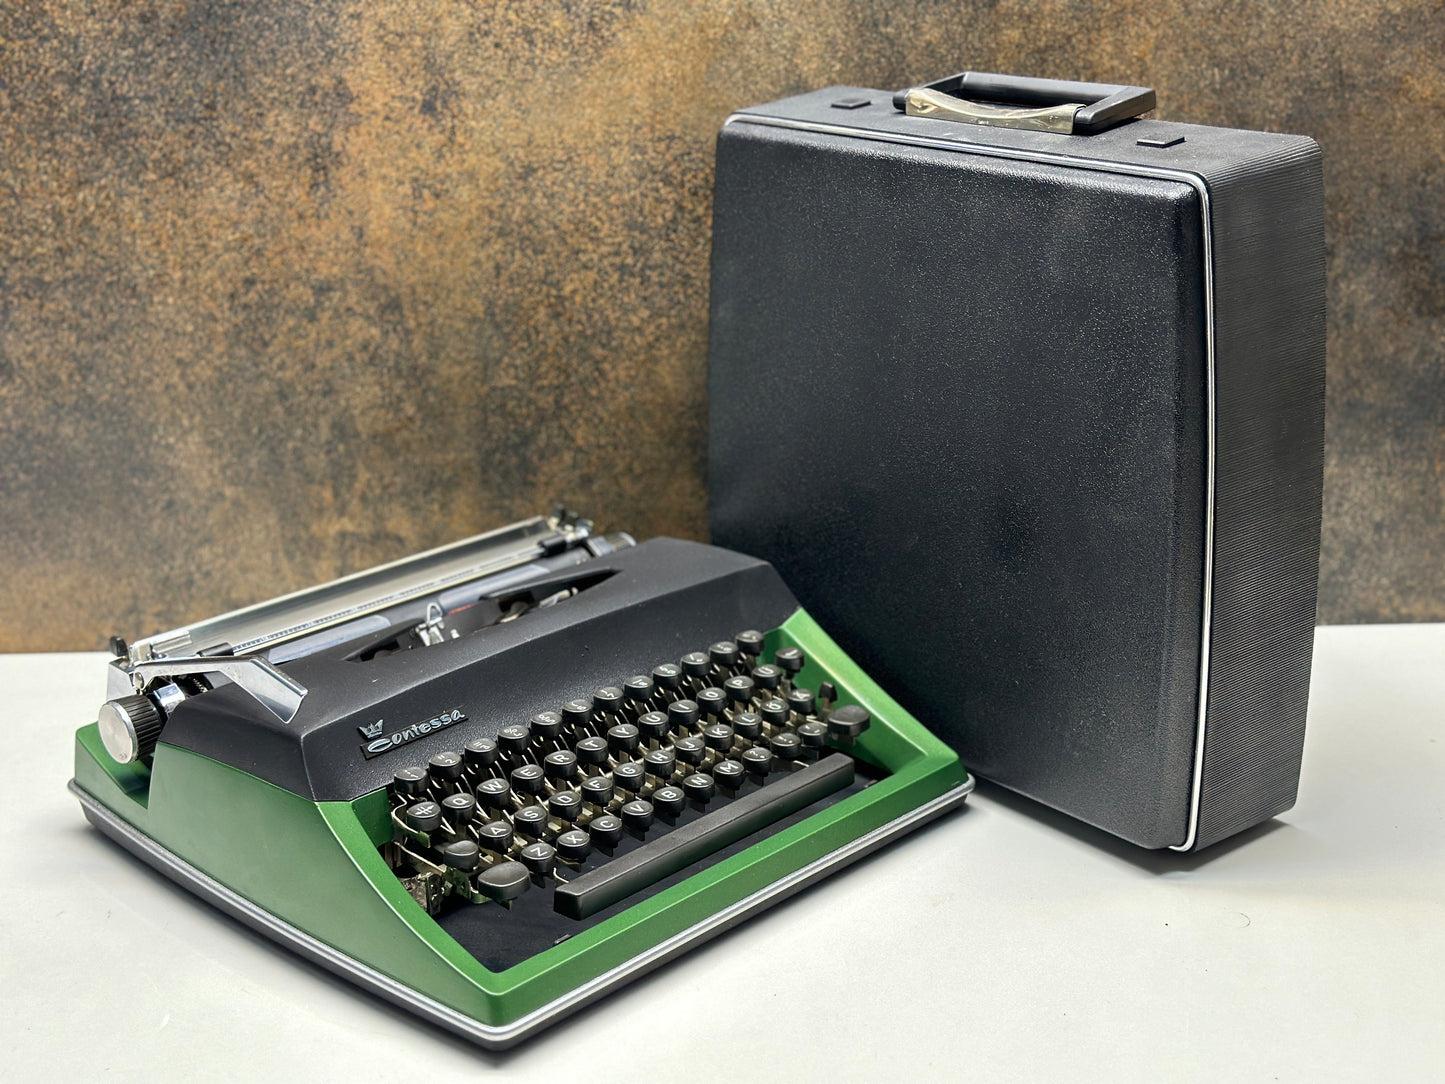 Qwerty Typewriter,Adler Contessa Typewriter,Retro Design,Classic and Reliable Writing Tool,Retro Style,Black Typewriter,holiday decor